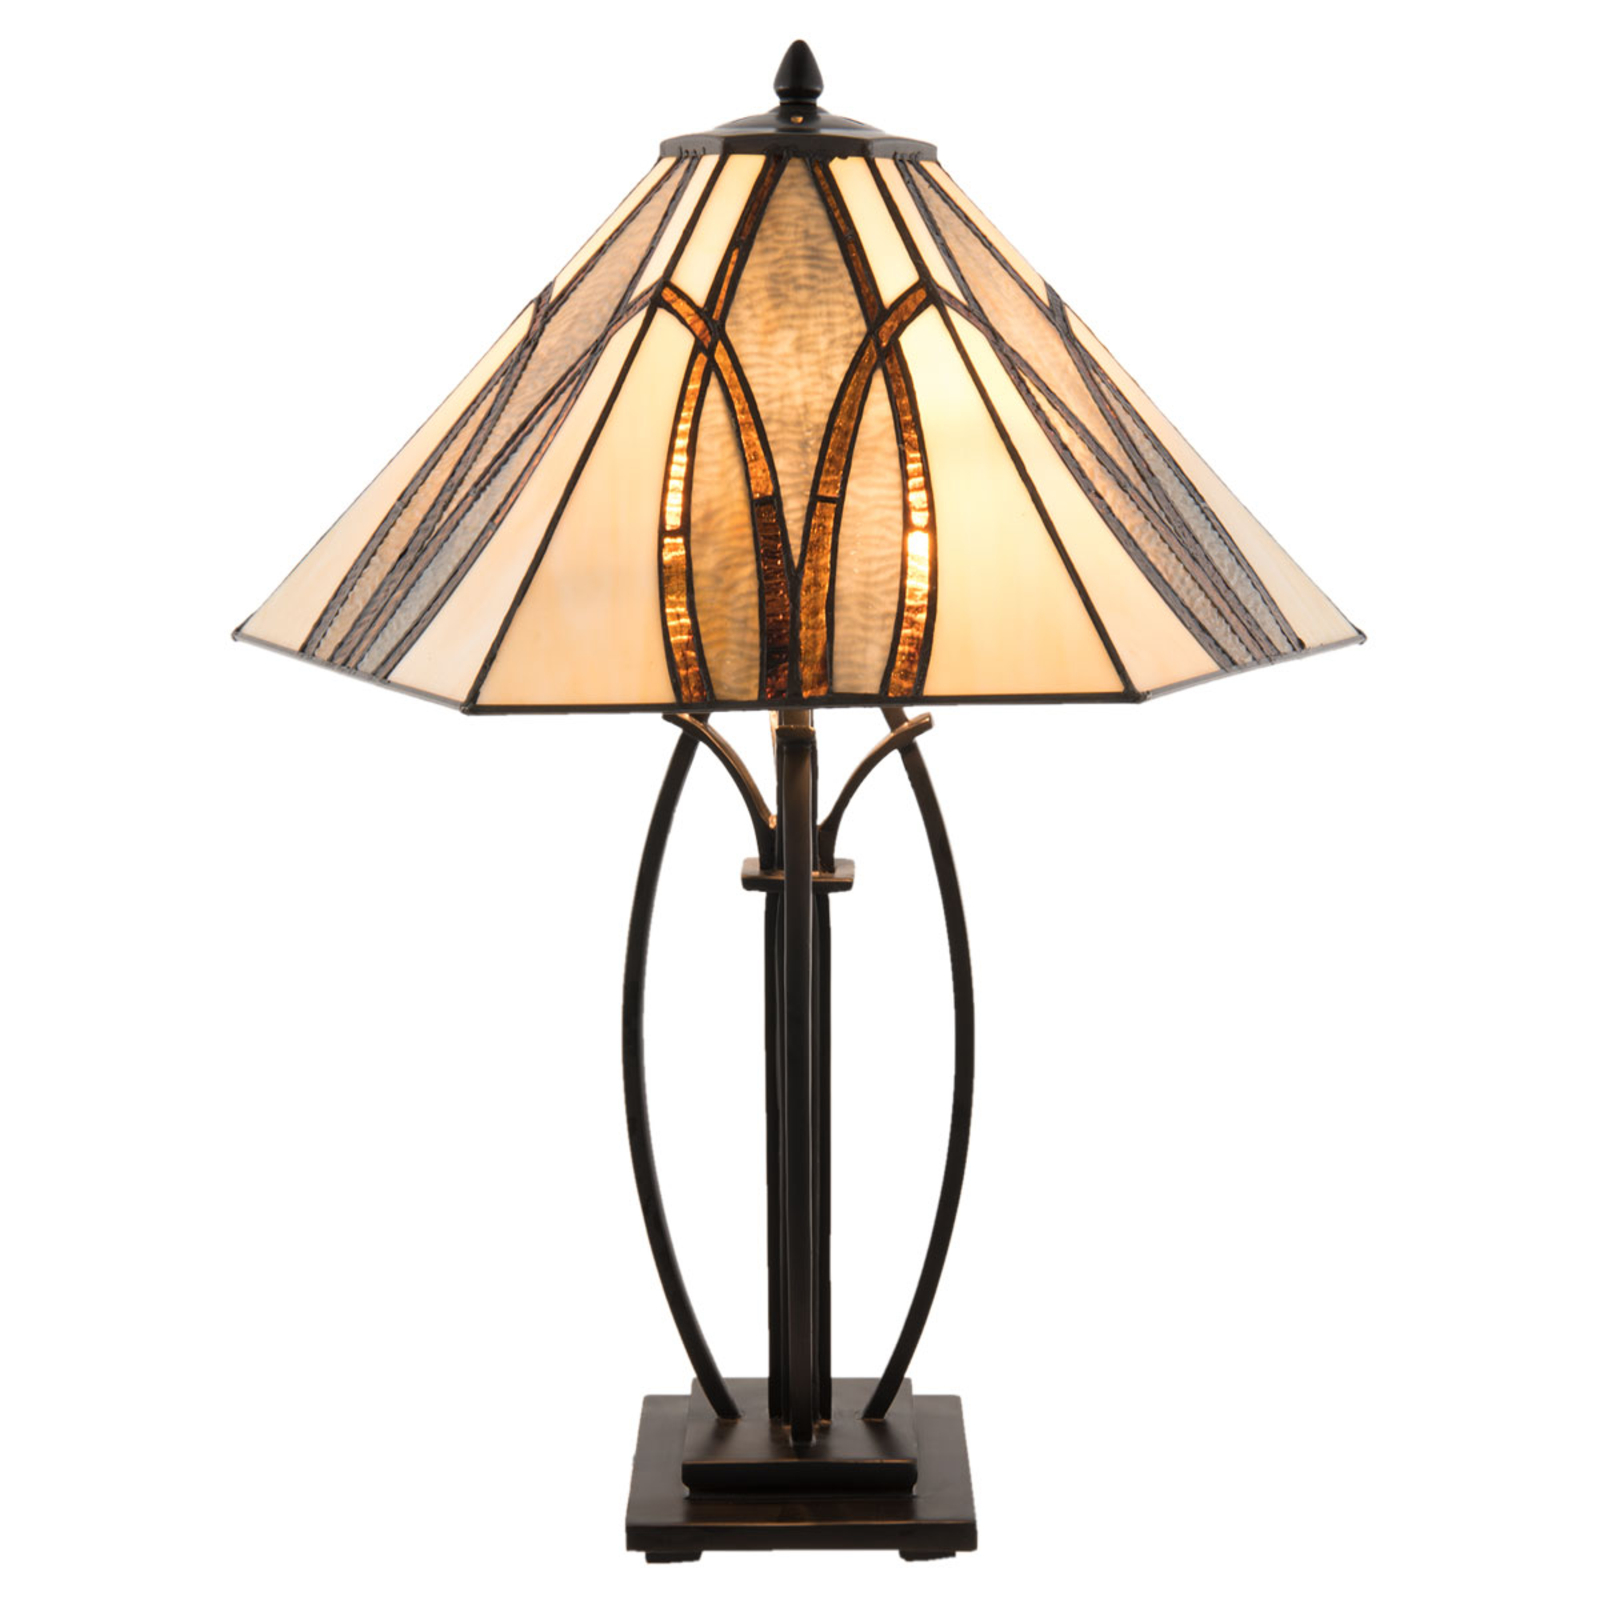 Tafellamp 5913 met bruine glazen kap